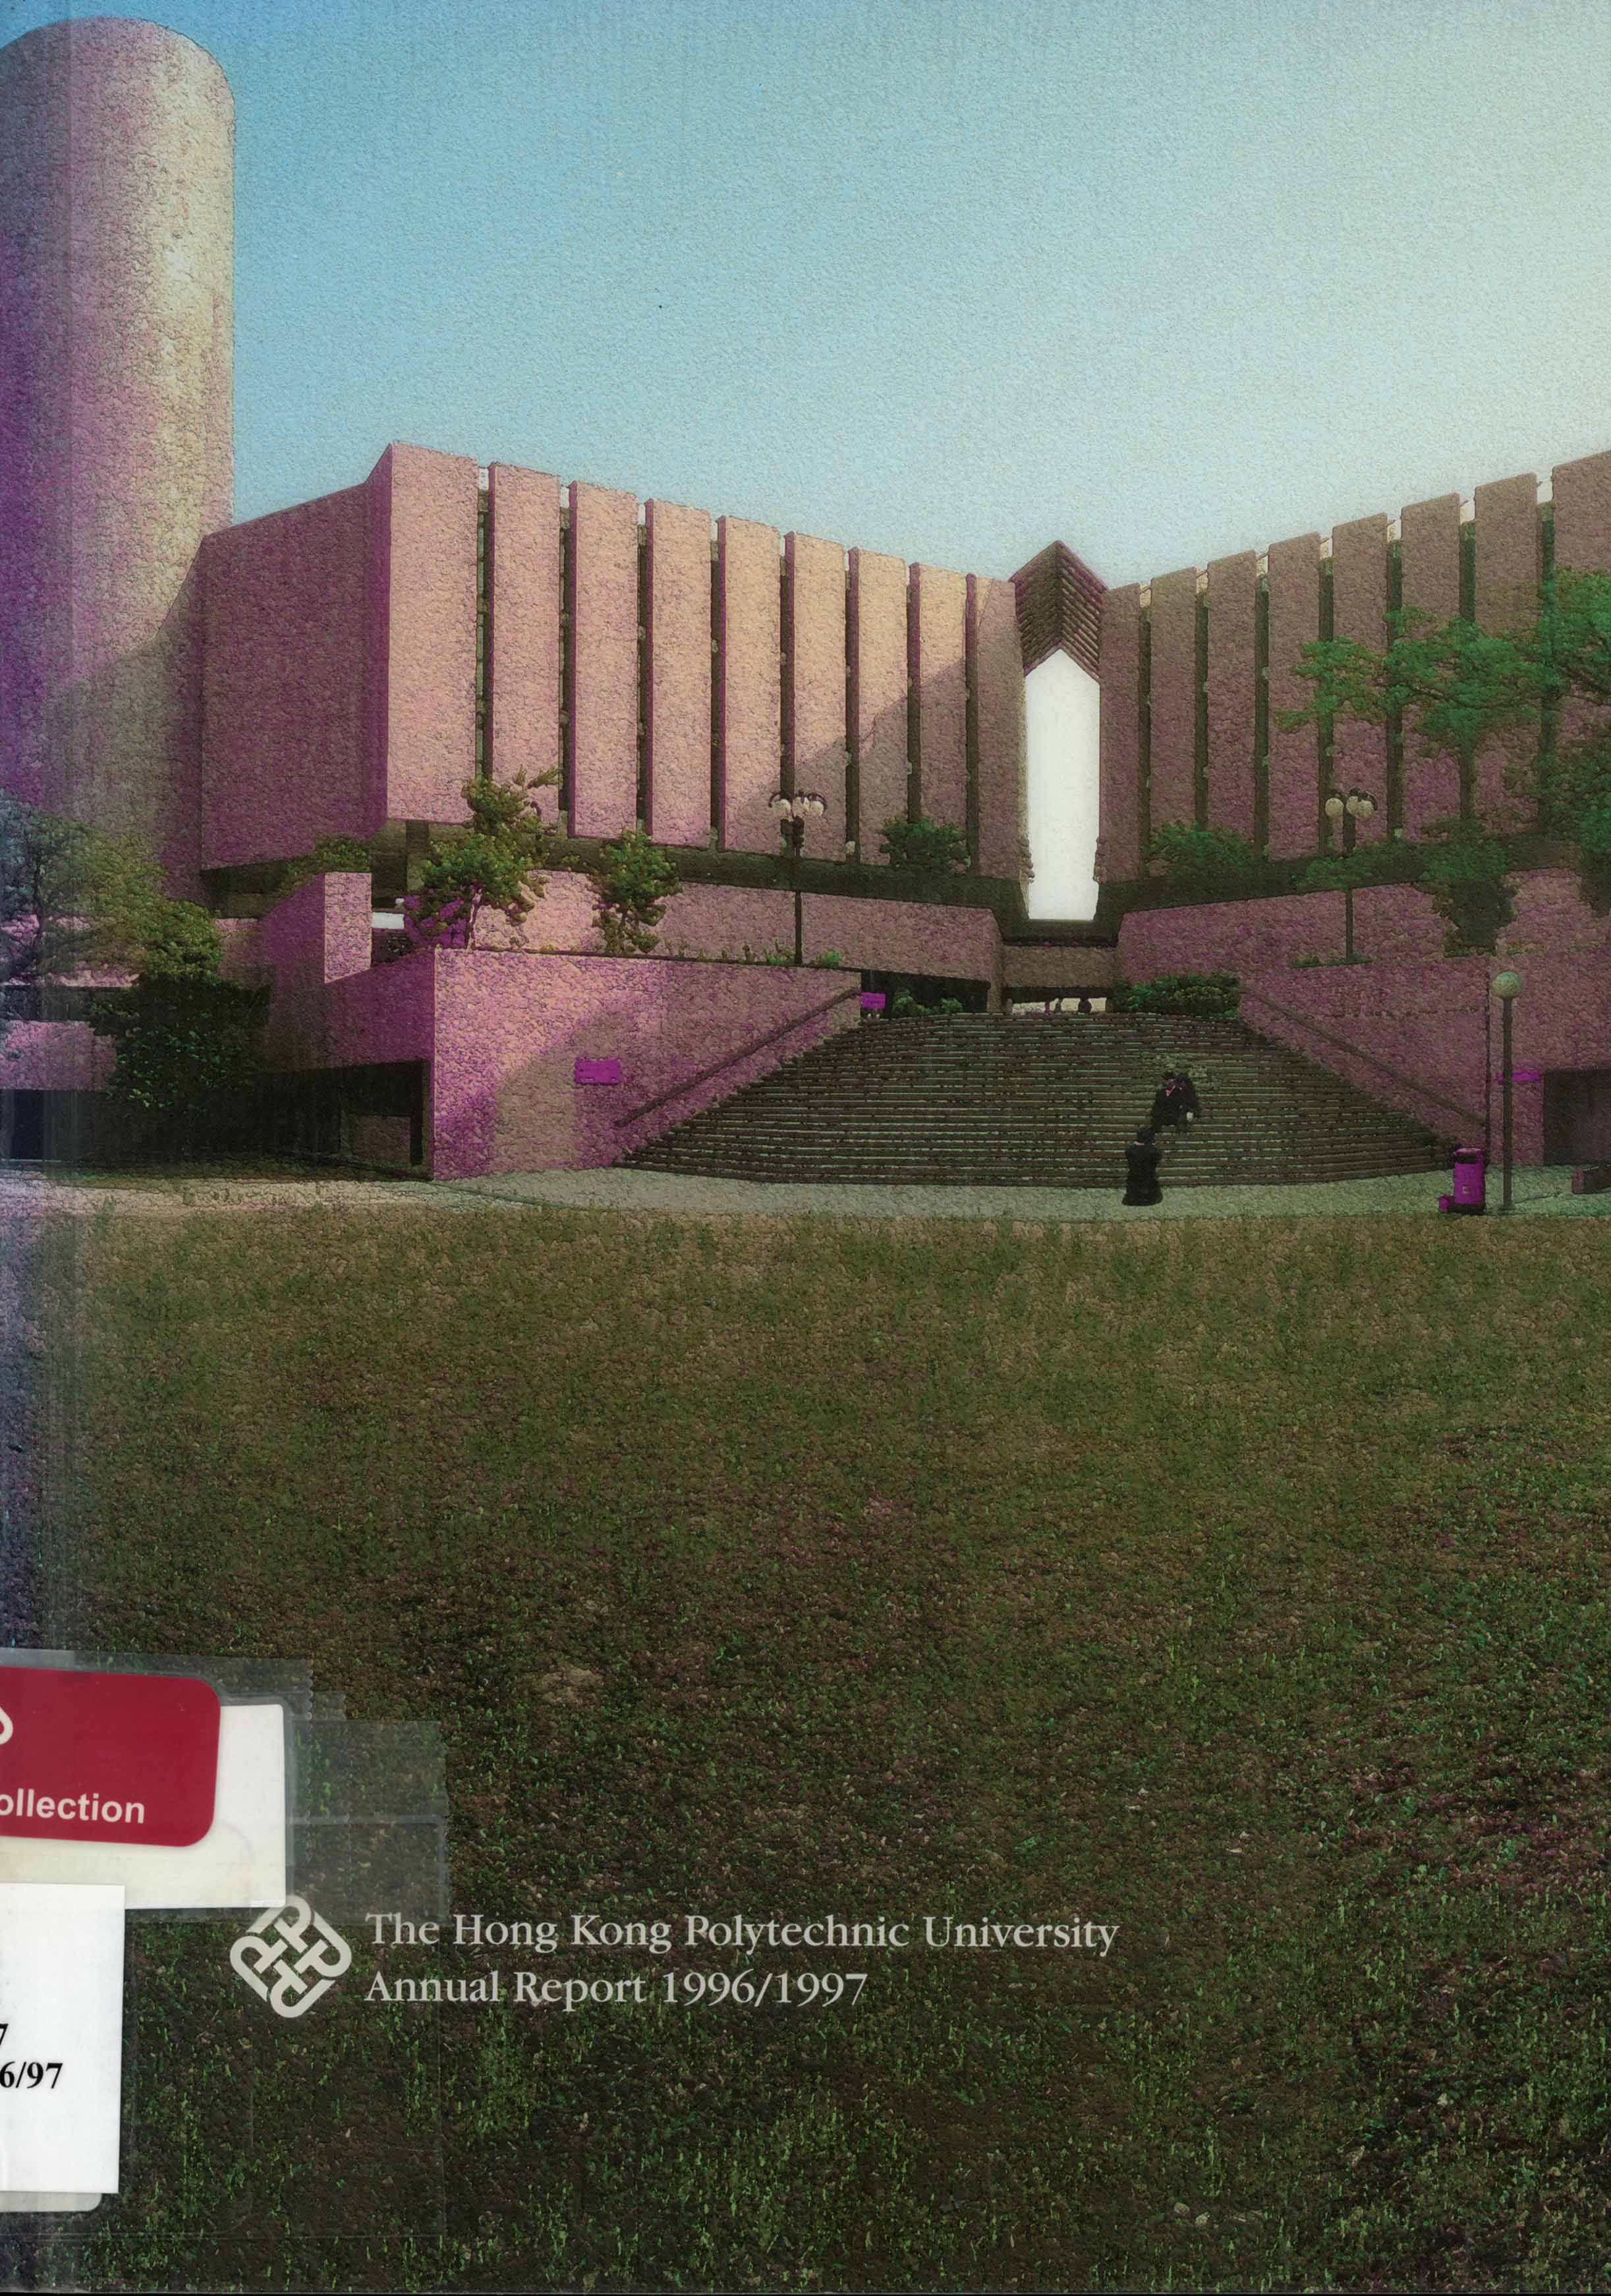 The Hong Kong Polytechnic University Annual Report 1996/97